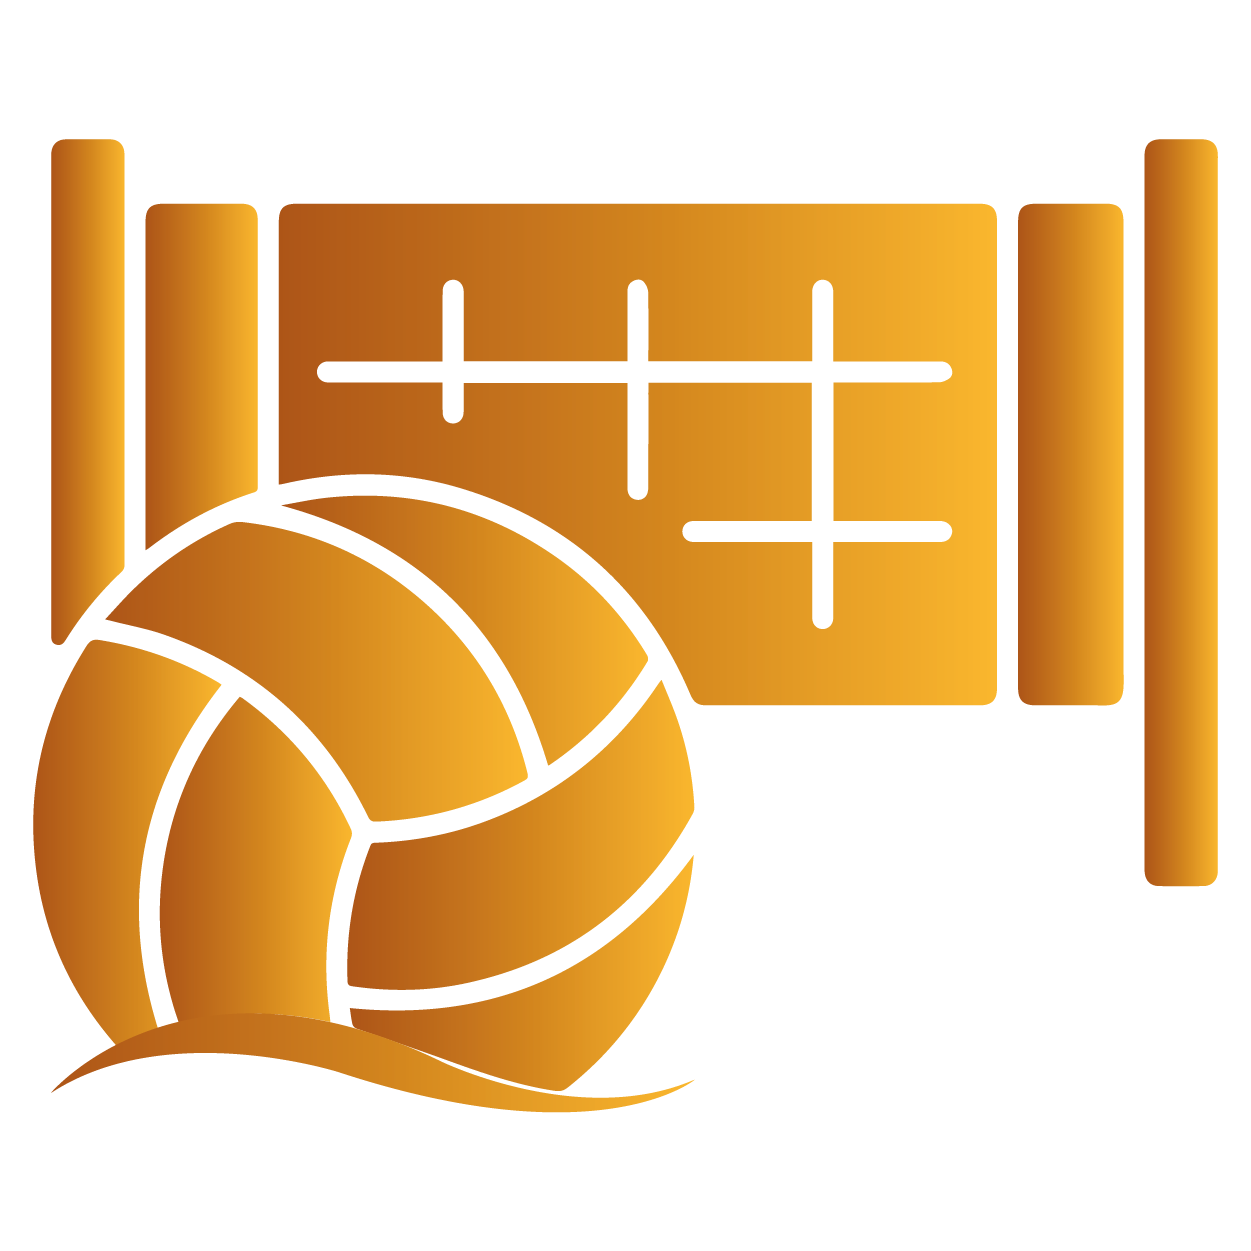 Beach VolleyBall